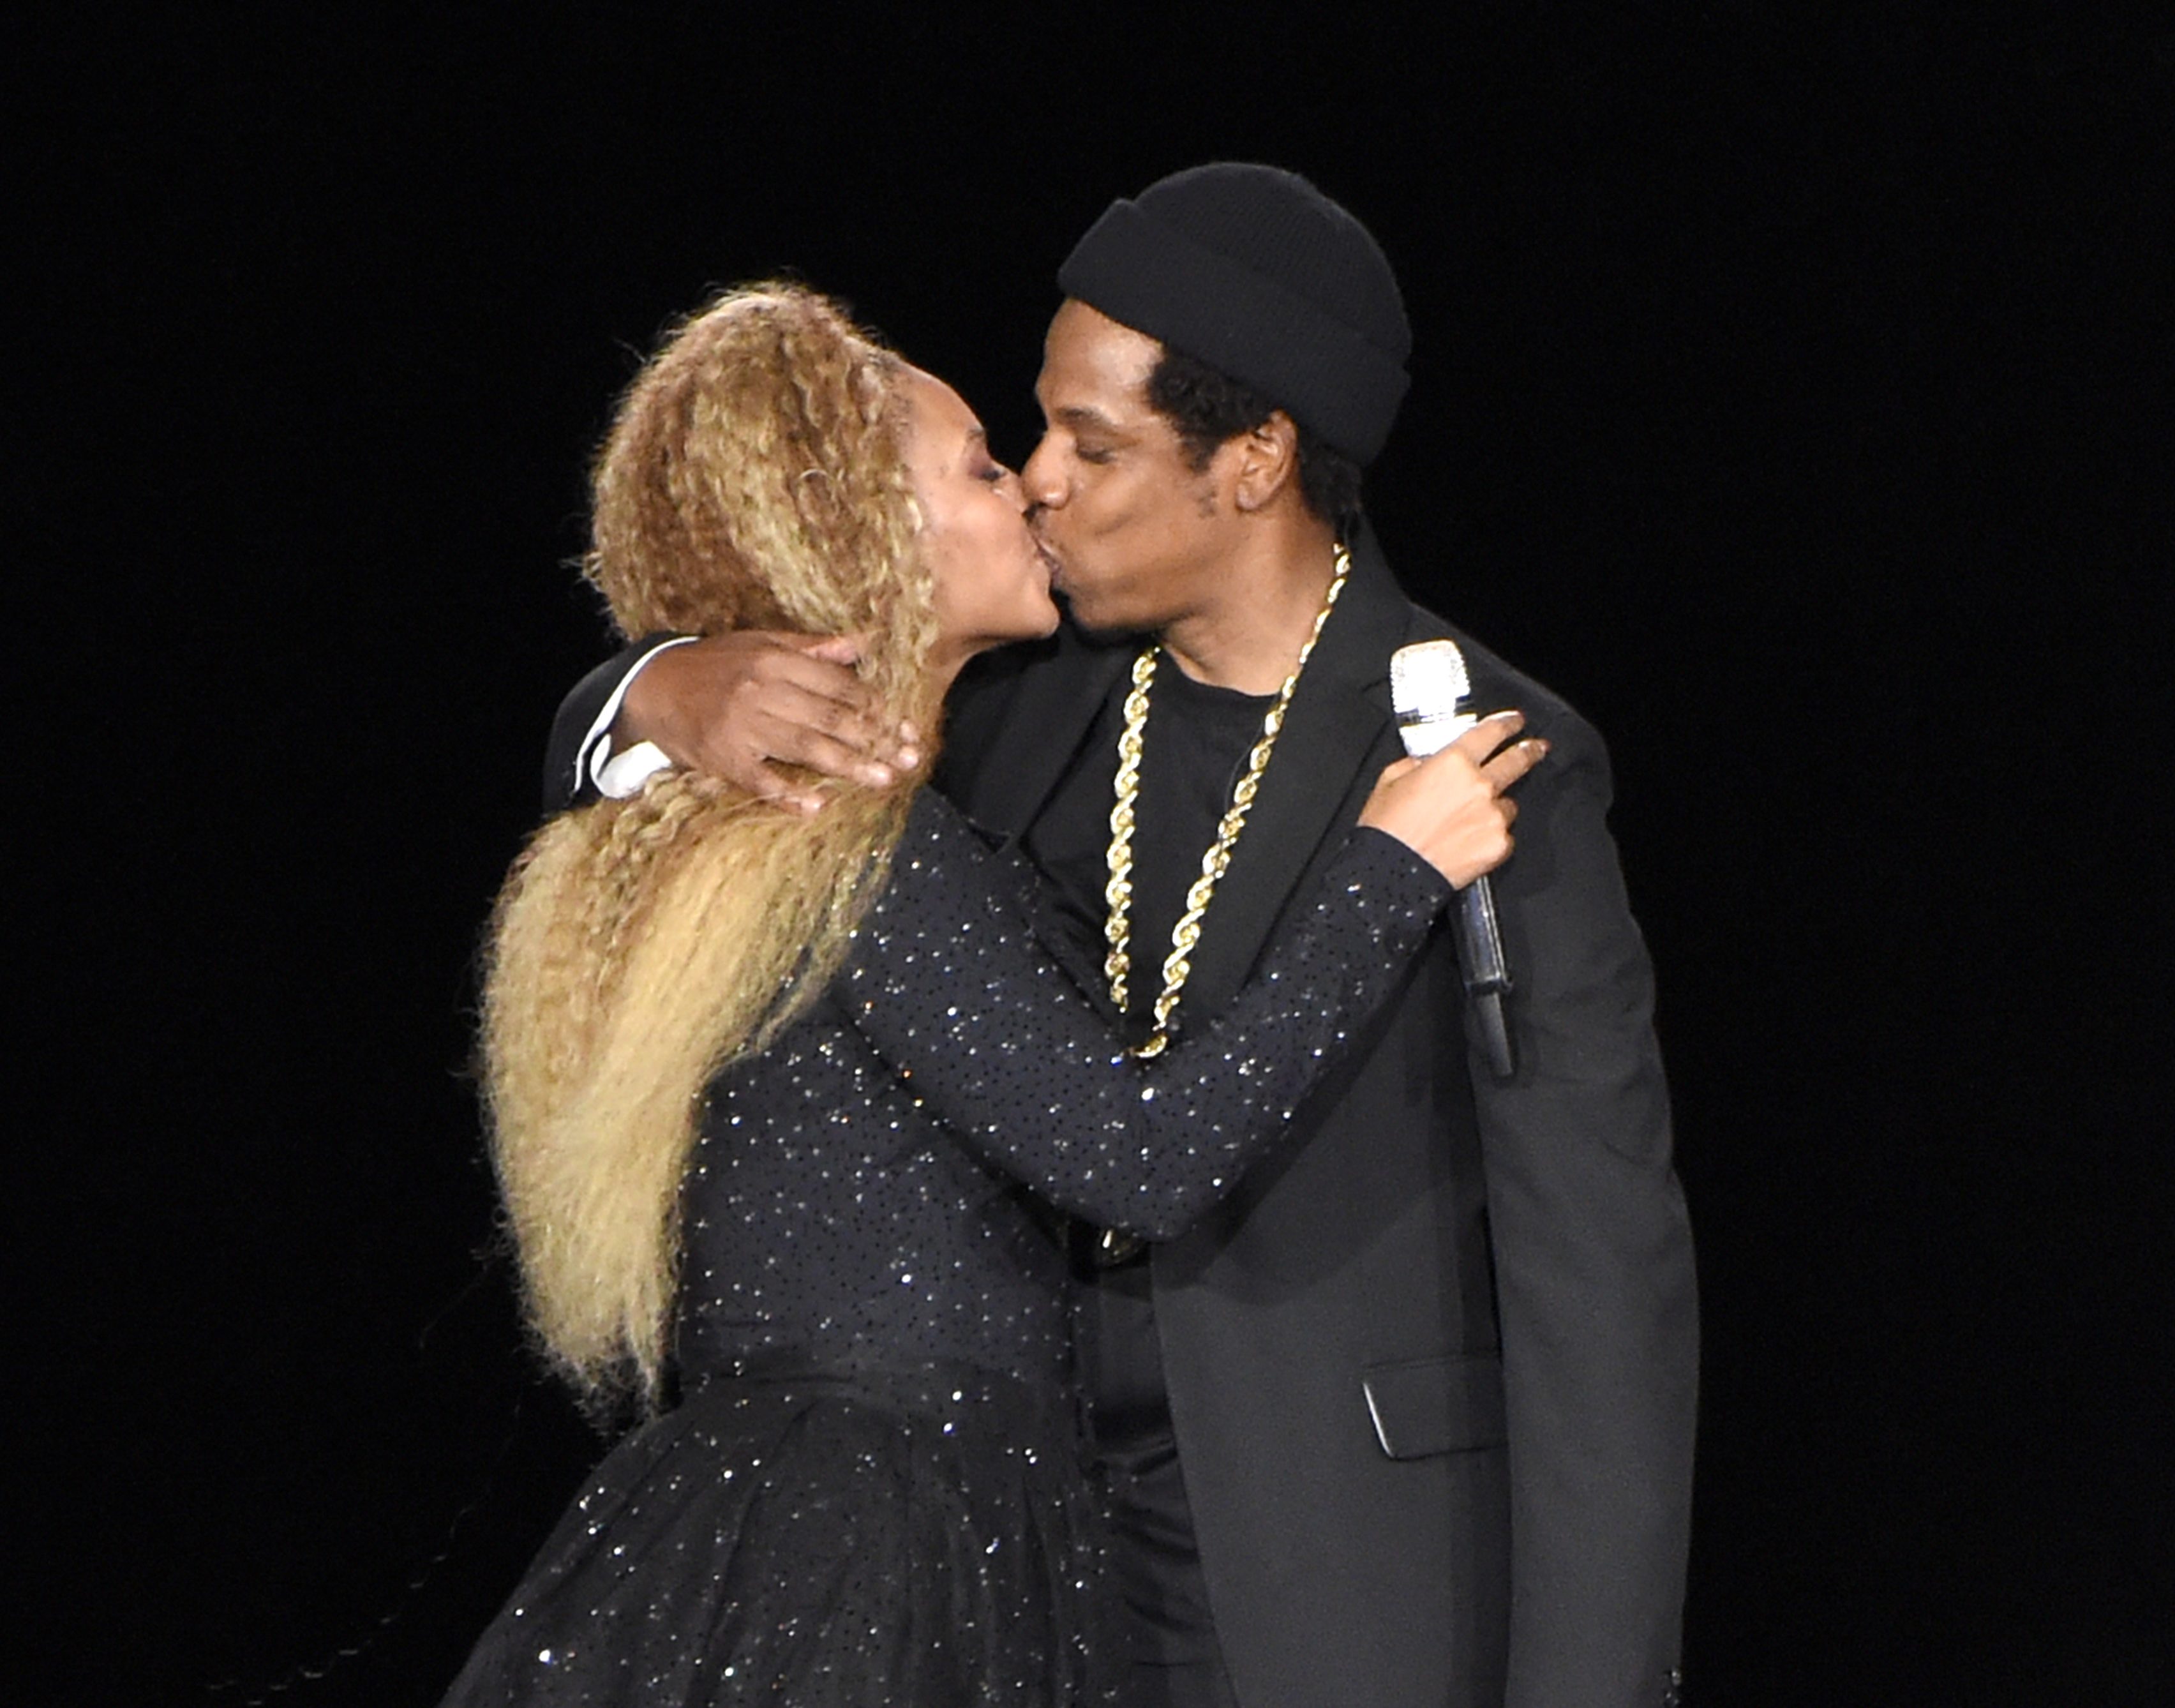 Big Cash Carters: Jay-Z And Beyonce's OTR2 Tour Grosses $253,000,000